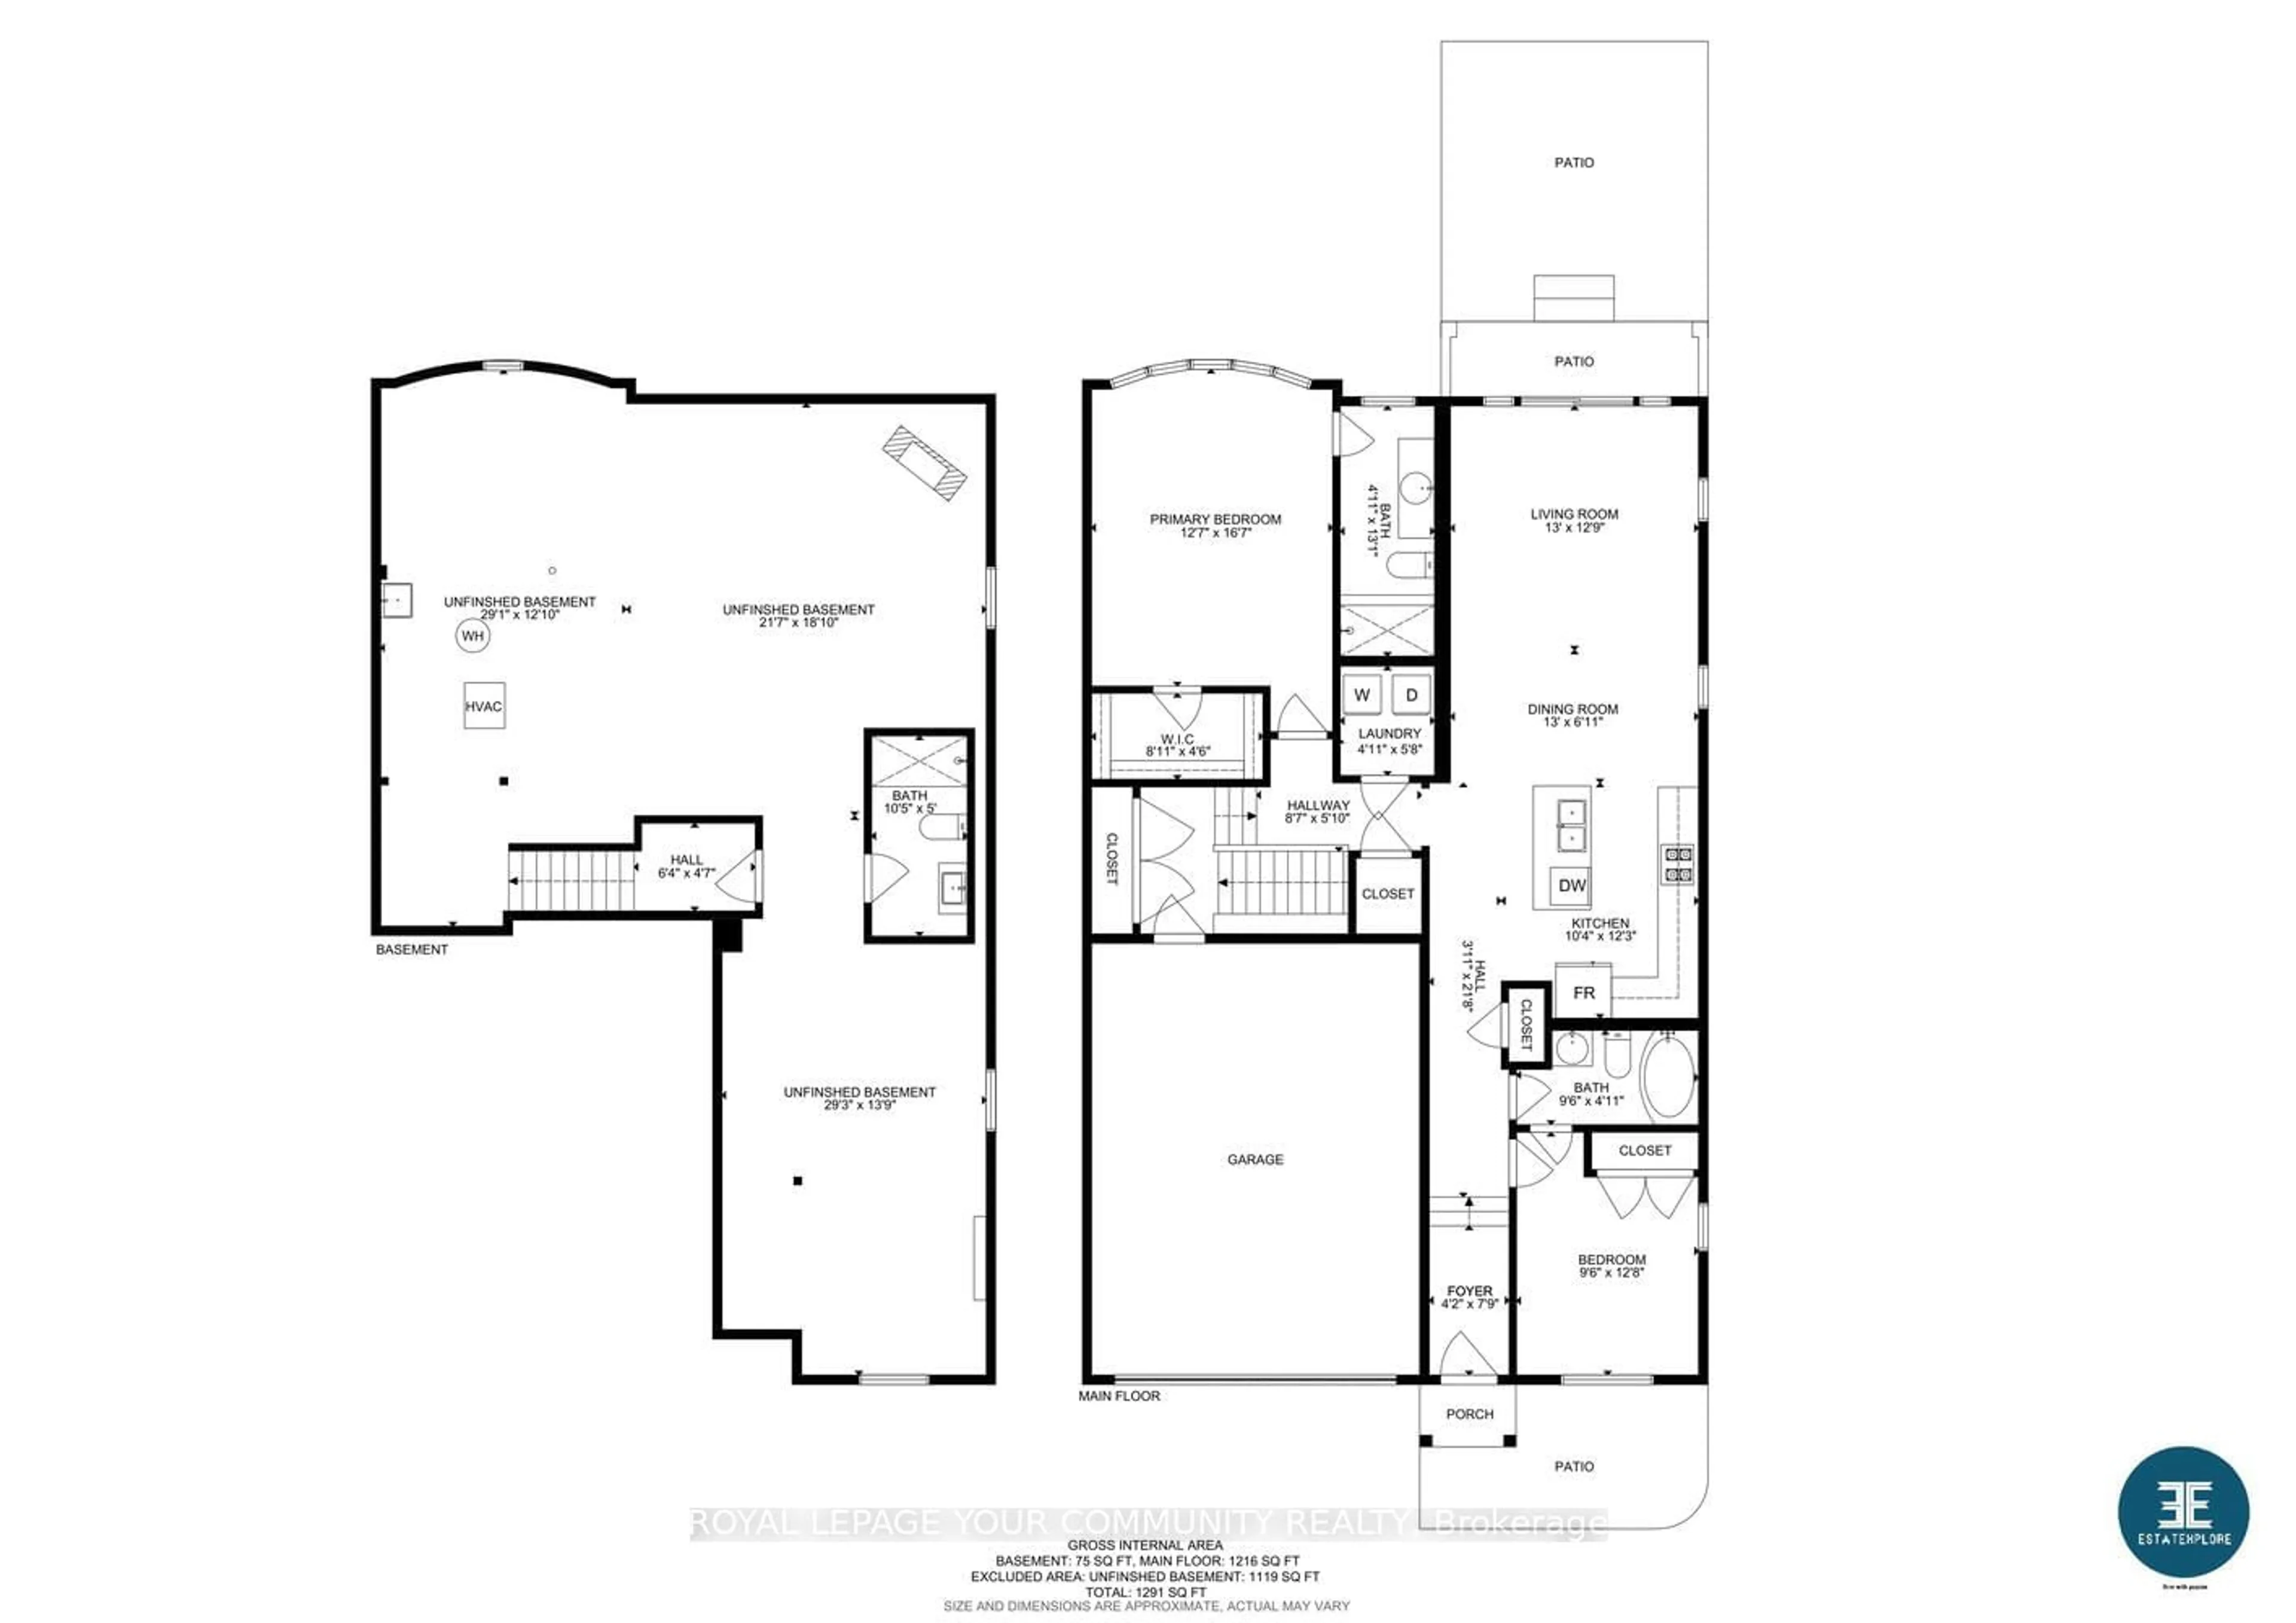 Floor plan for 518 Bayport Blvd, Midland Ontario L4R 0G4